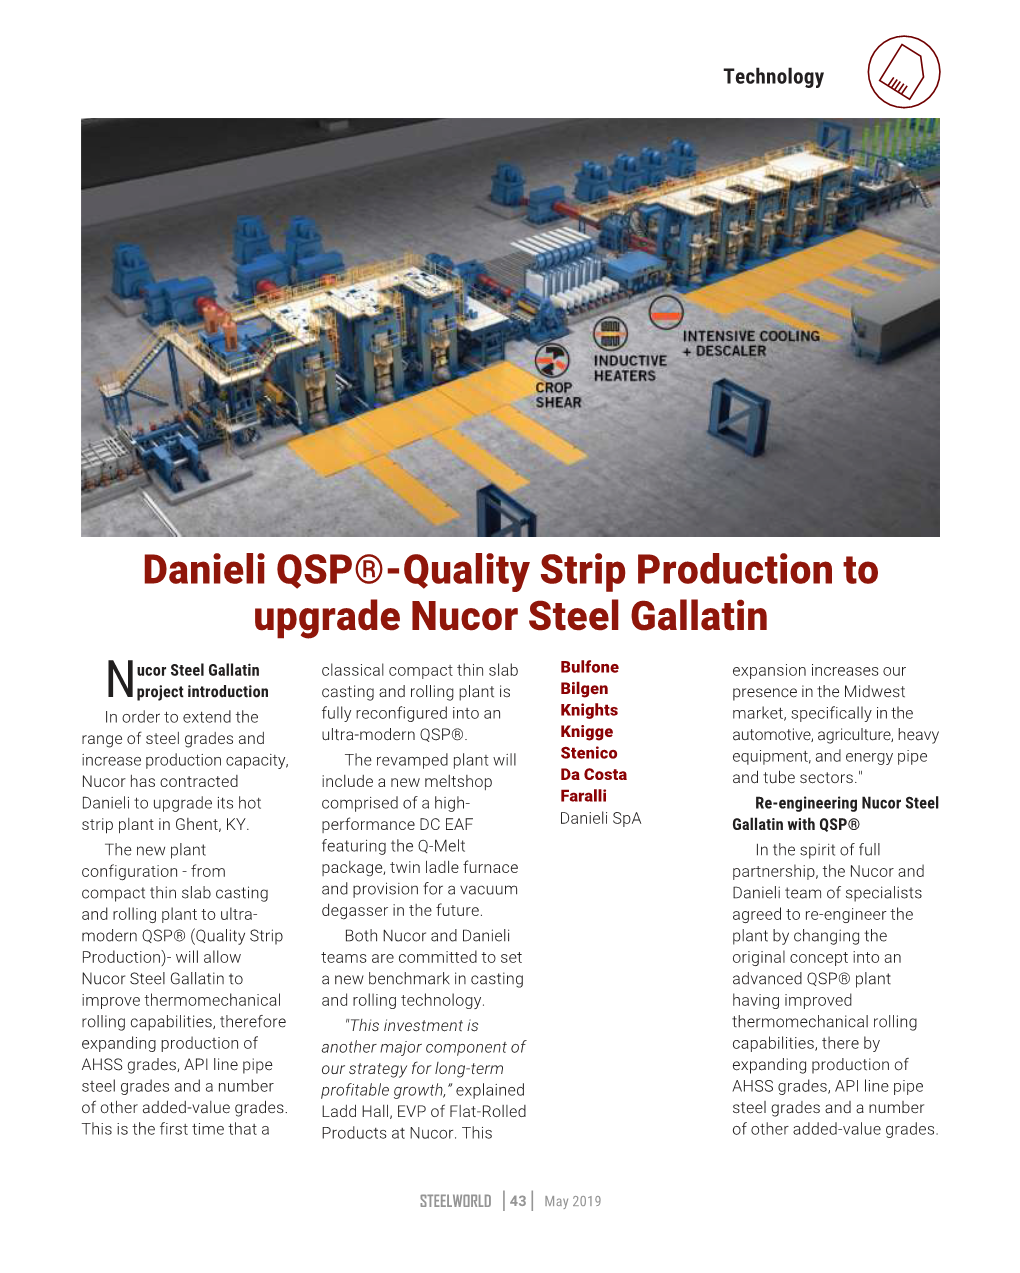 Danieli QSP®-Quality Strip Production to Upgrade Nucor Steel Gallatin